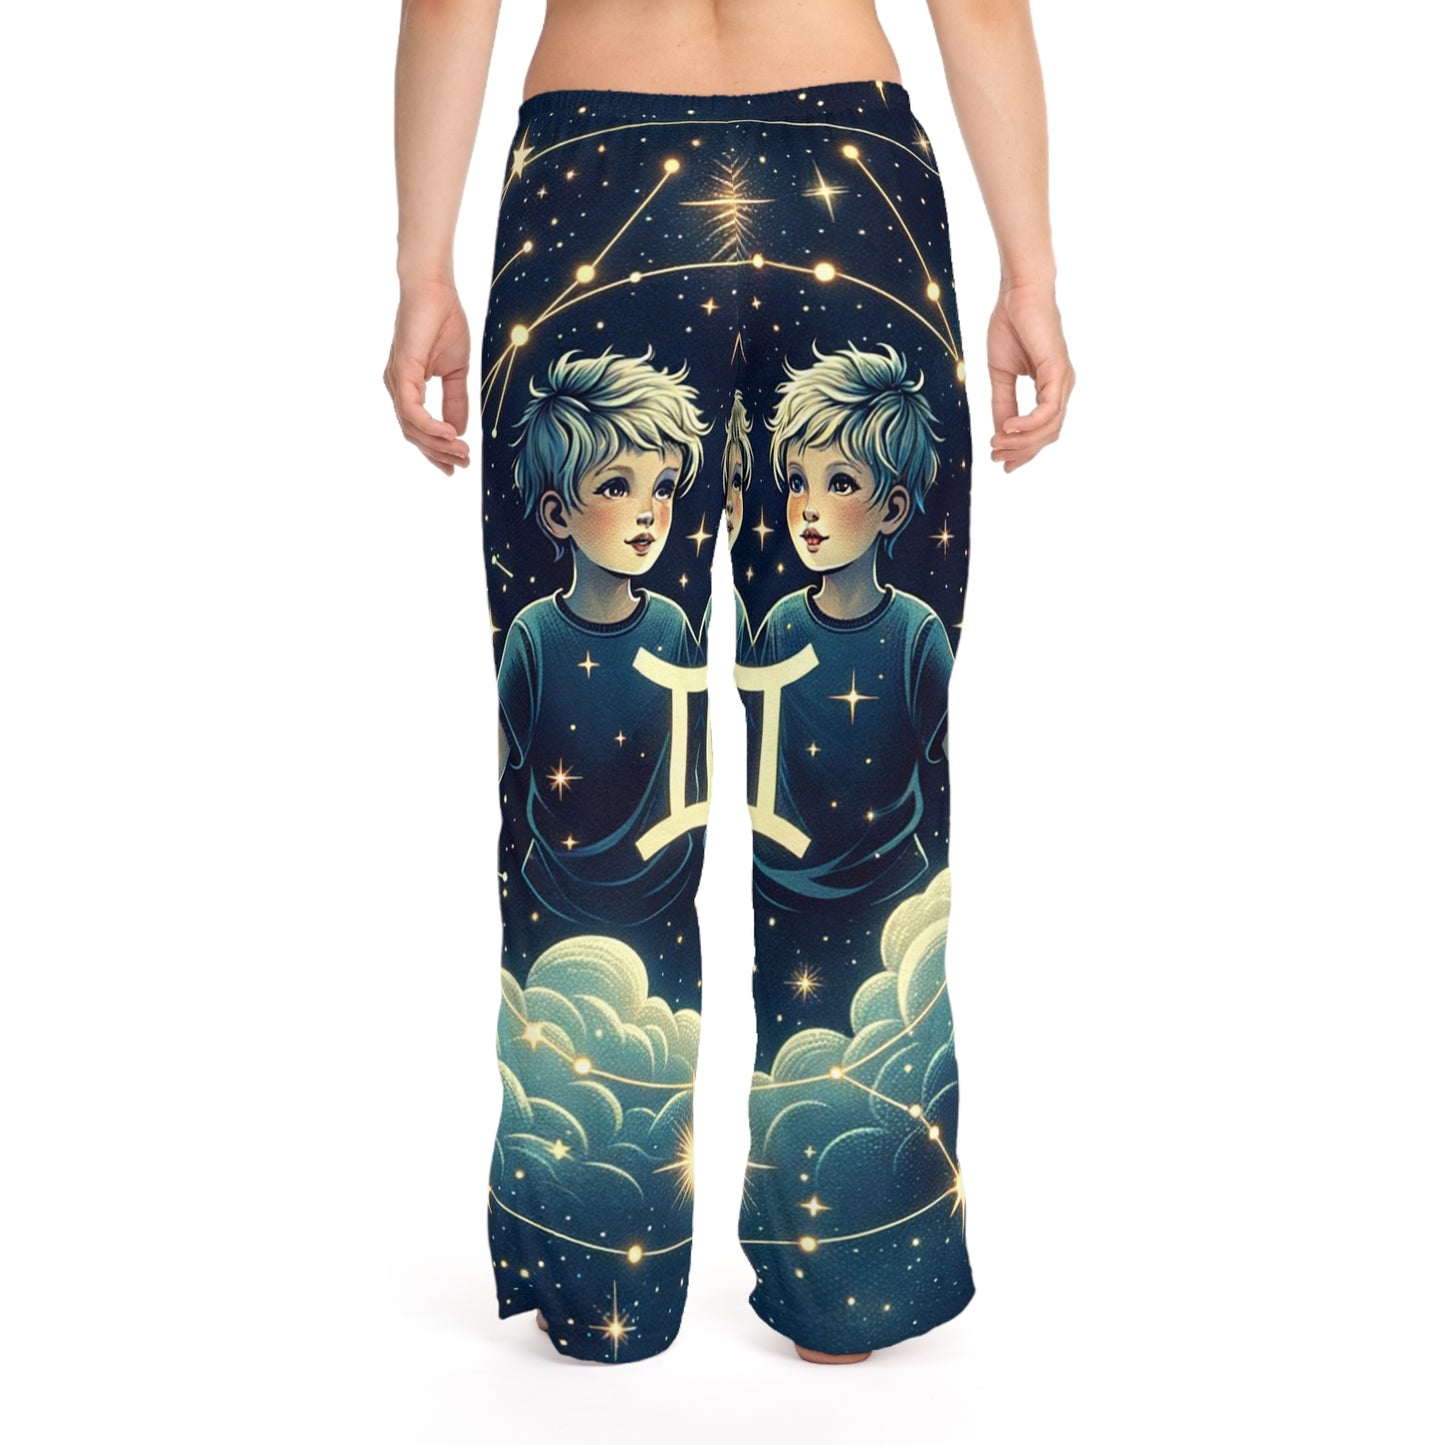 "Celestial Twinfinity" - Women lounge pants